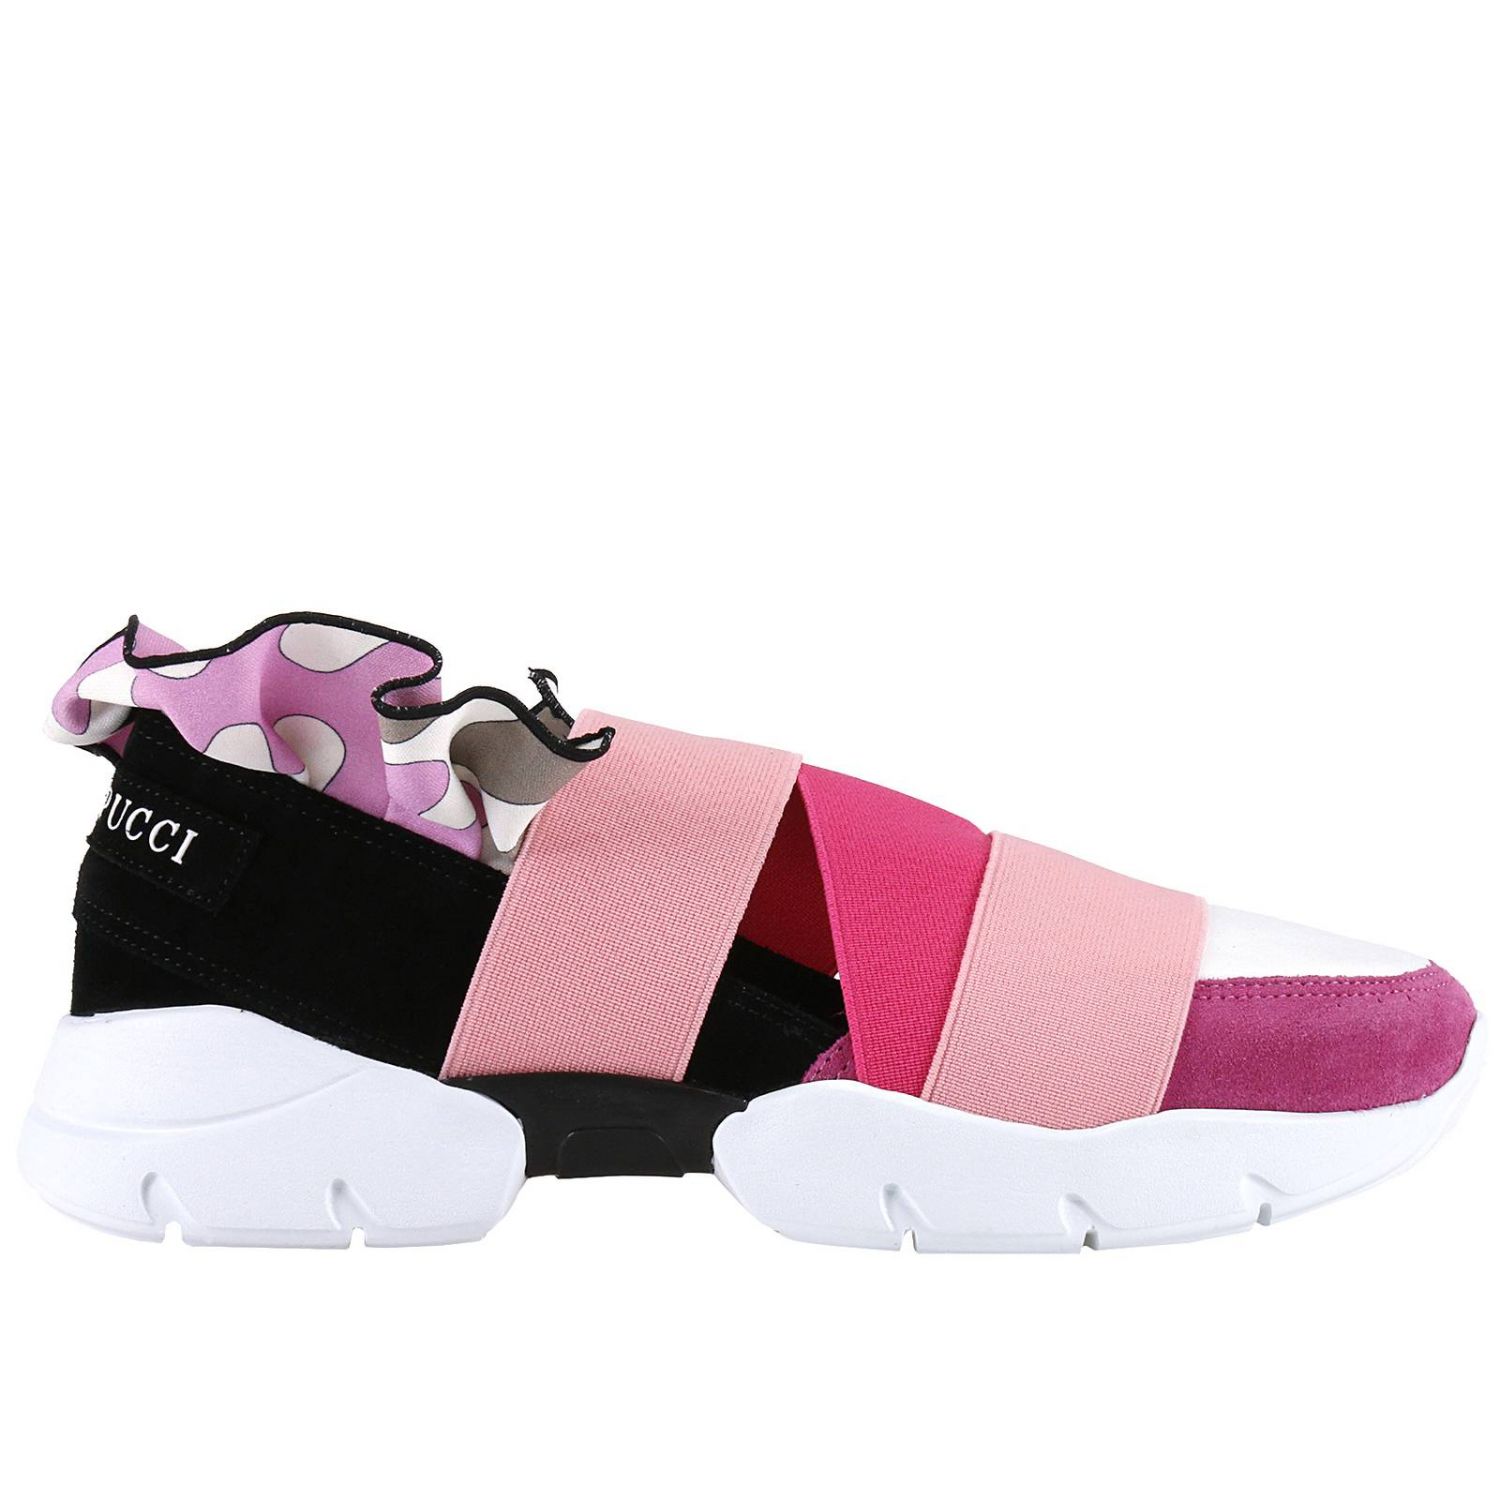 Emilio Pucci Outlet: Shoes women | Sneakers Emilio Pucci Women Pink ...